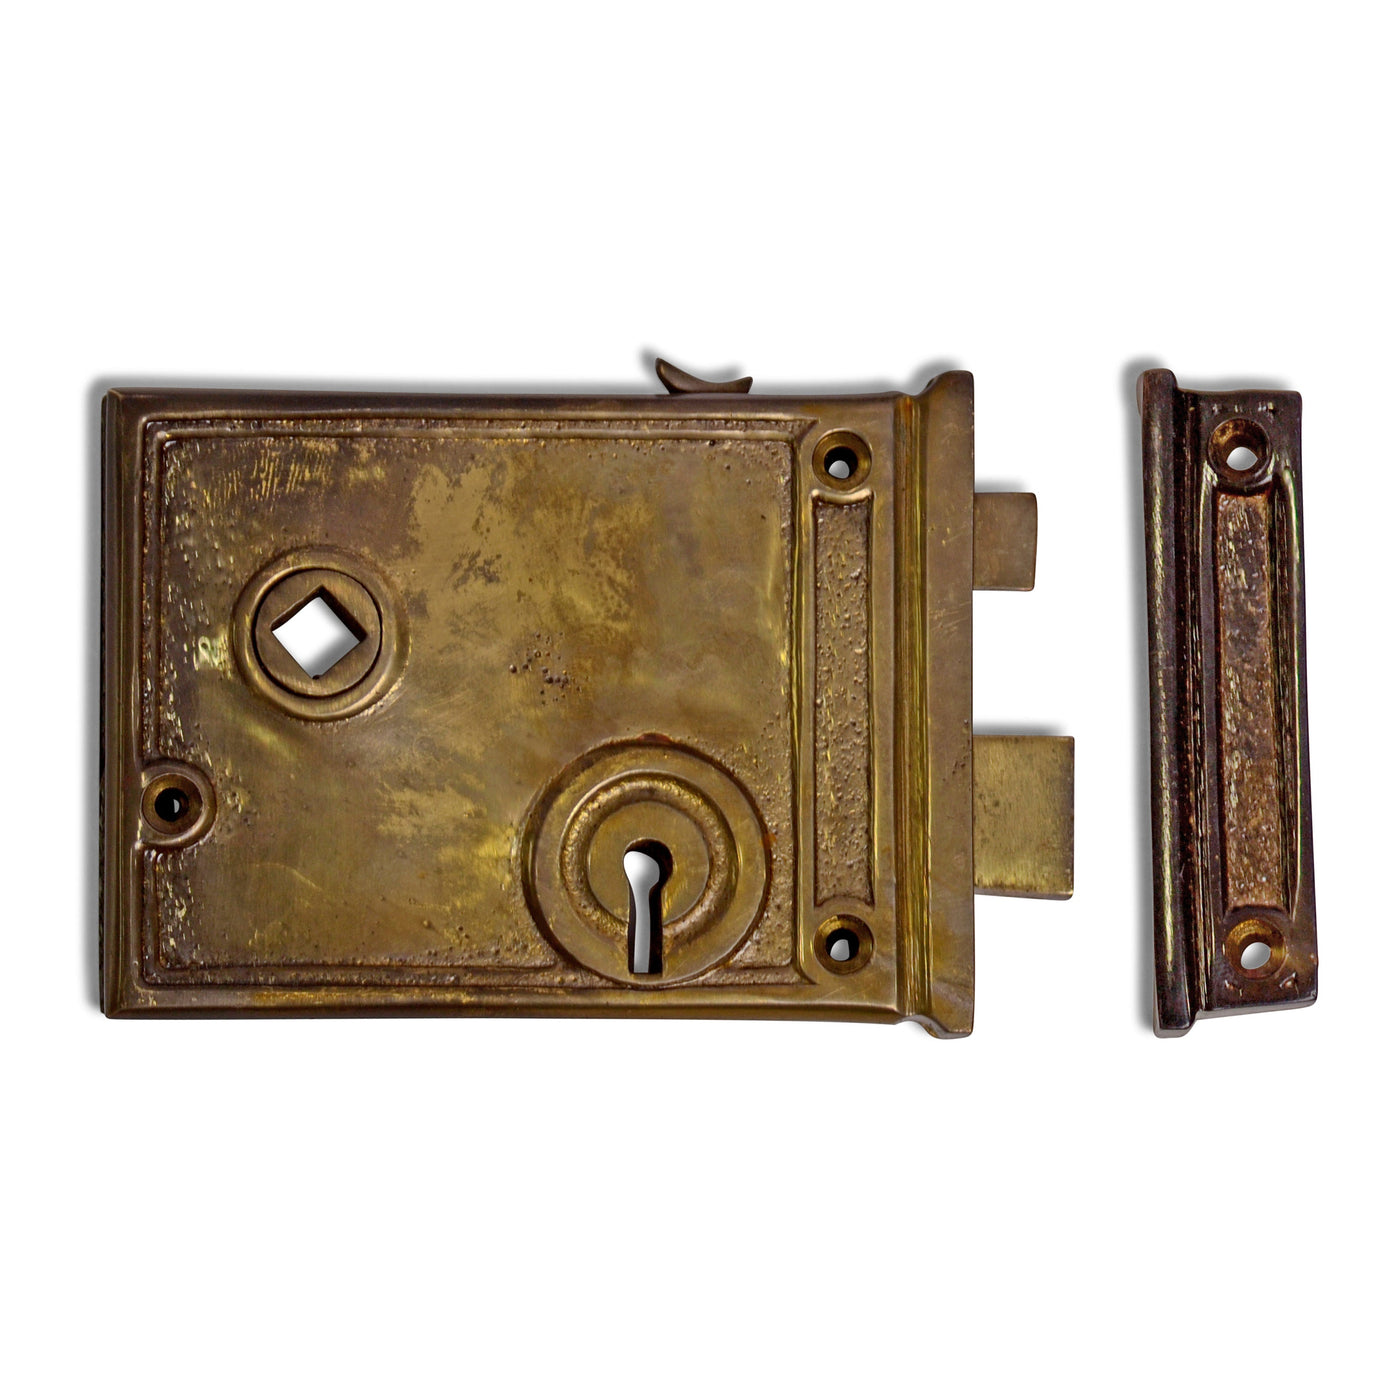 Rim Lock Set with Regency Fluted Glass Knob and Regular Rosette (Antique Brass Finish)